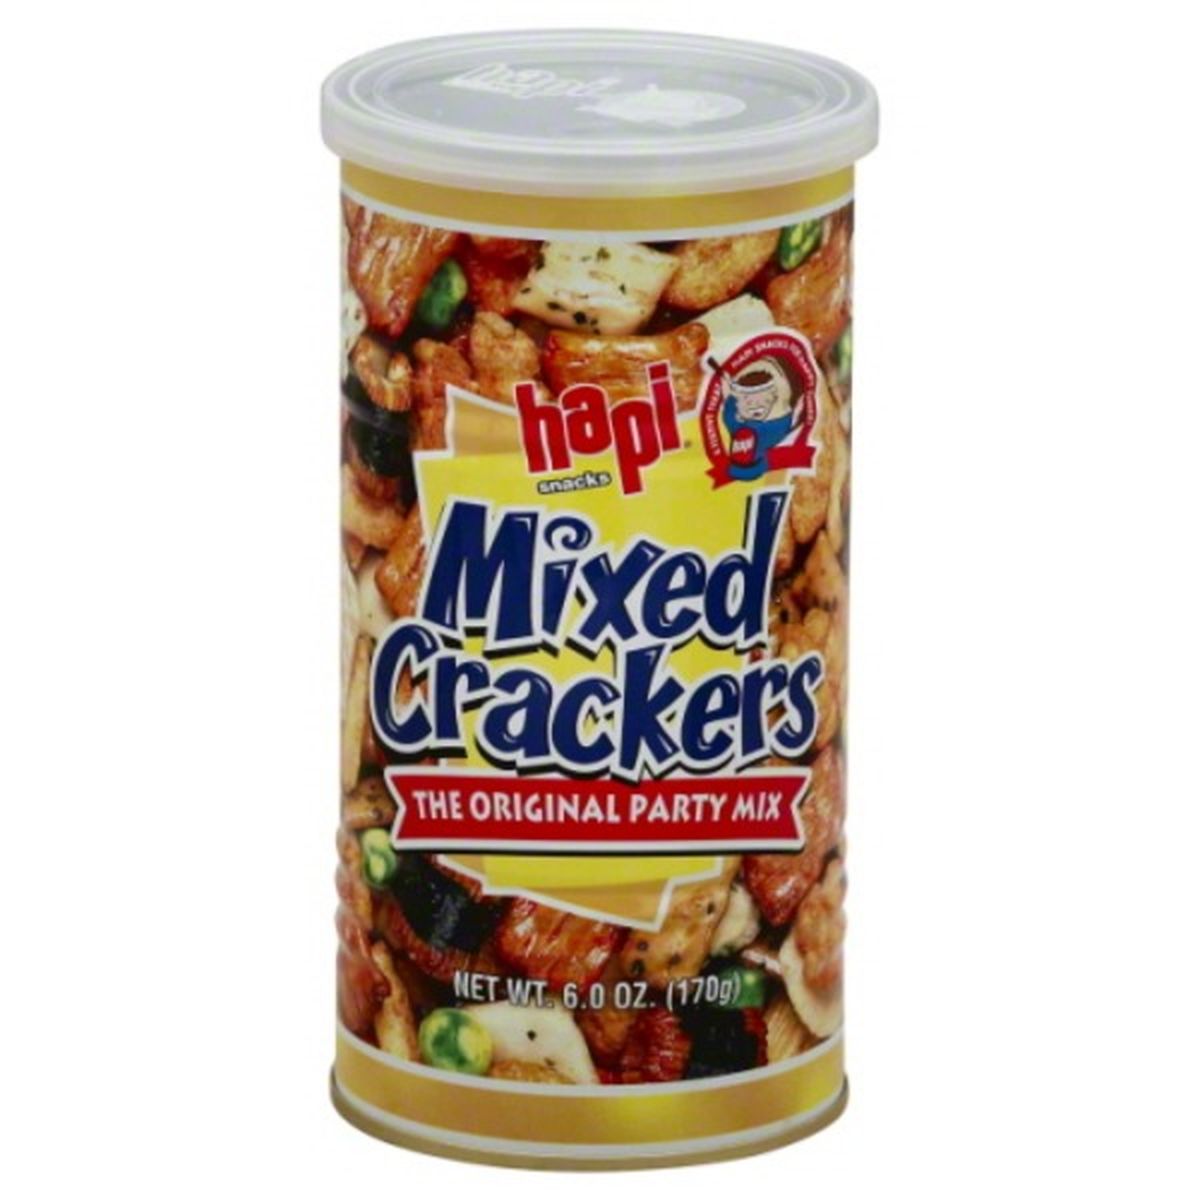 Calories in Hapi Crackers, Mixed